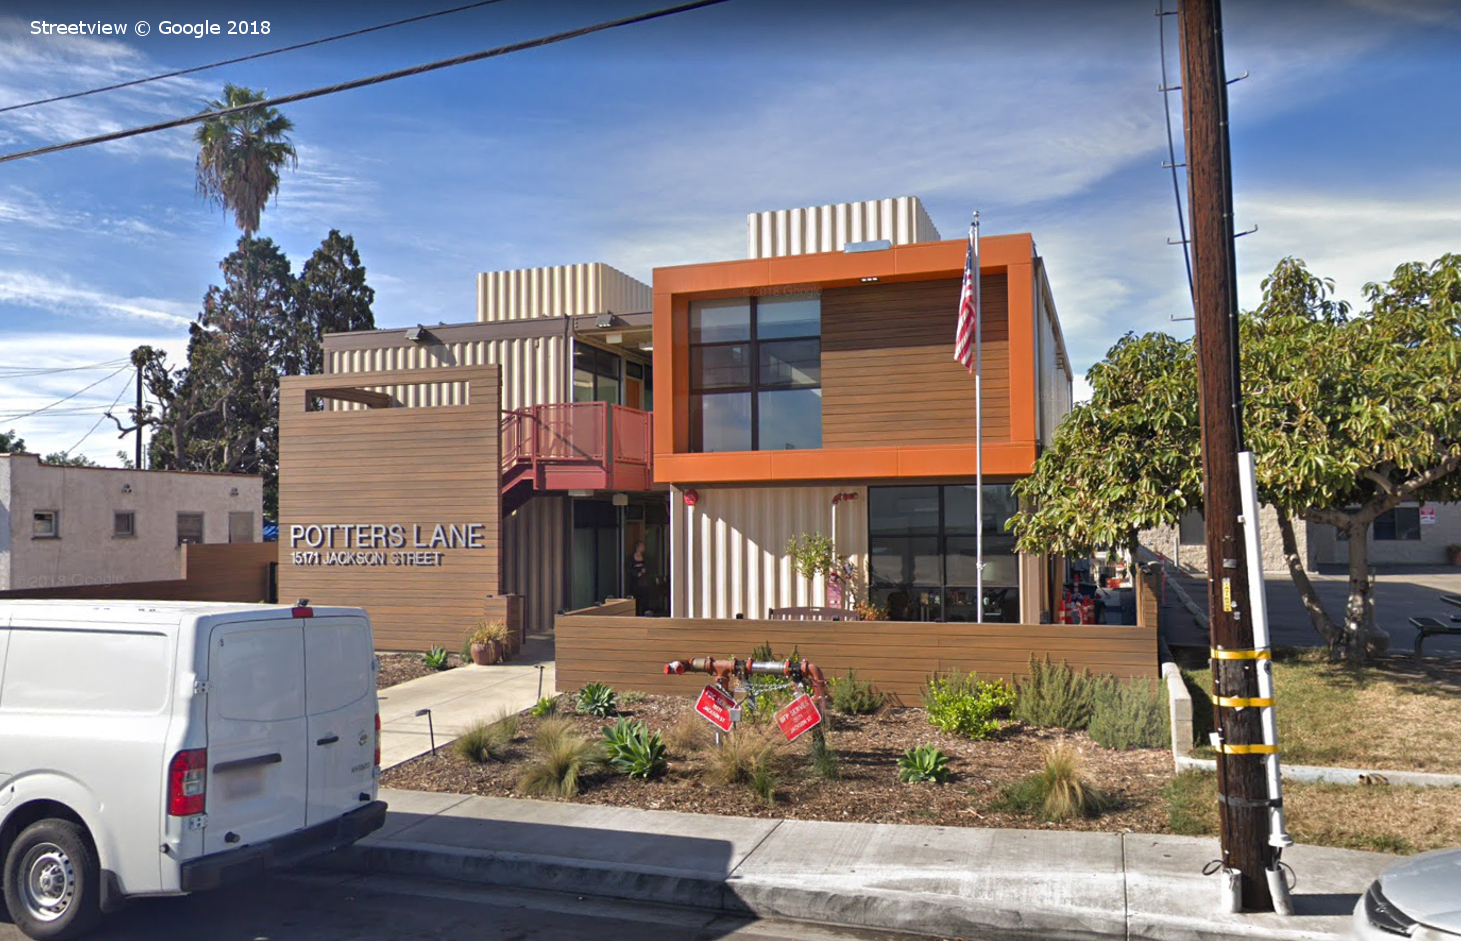 Potters Lane Veterans Housing, Google Streetview